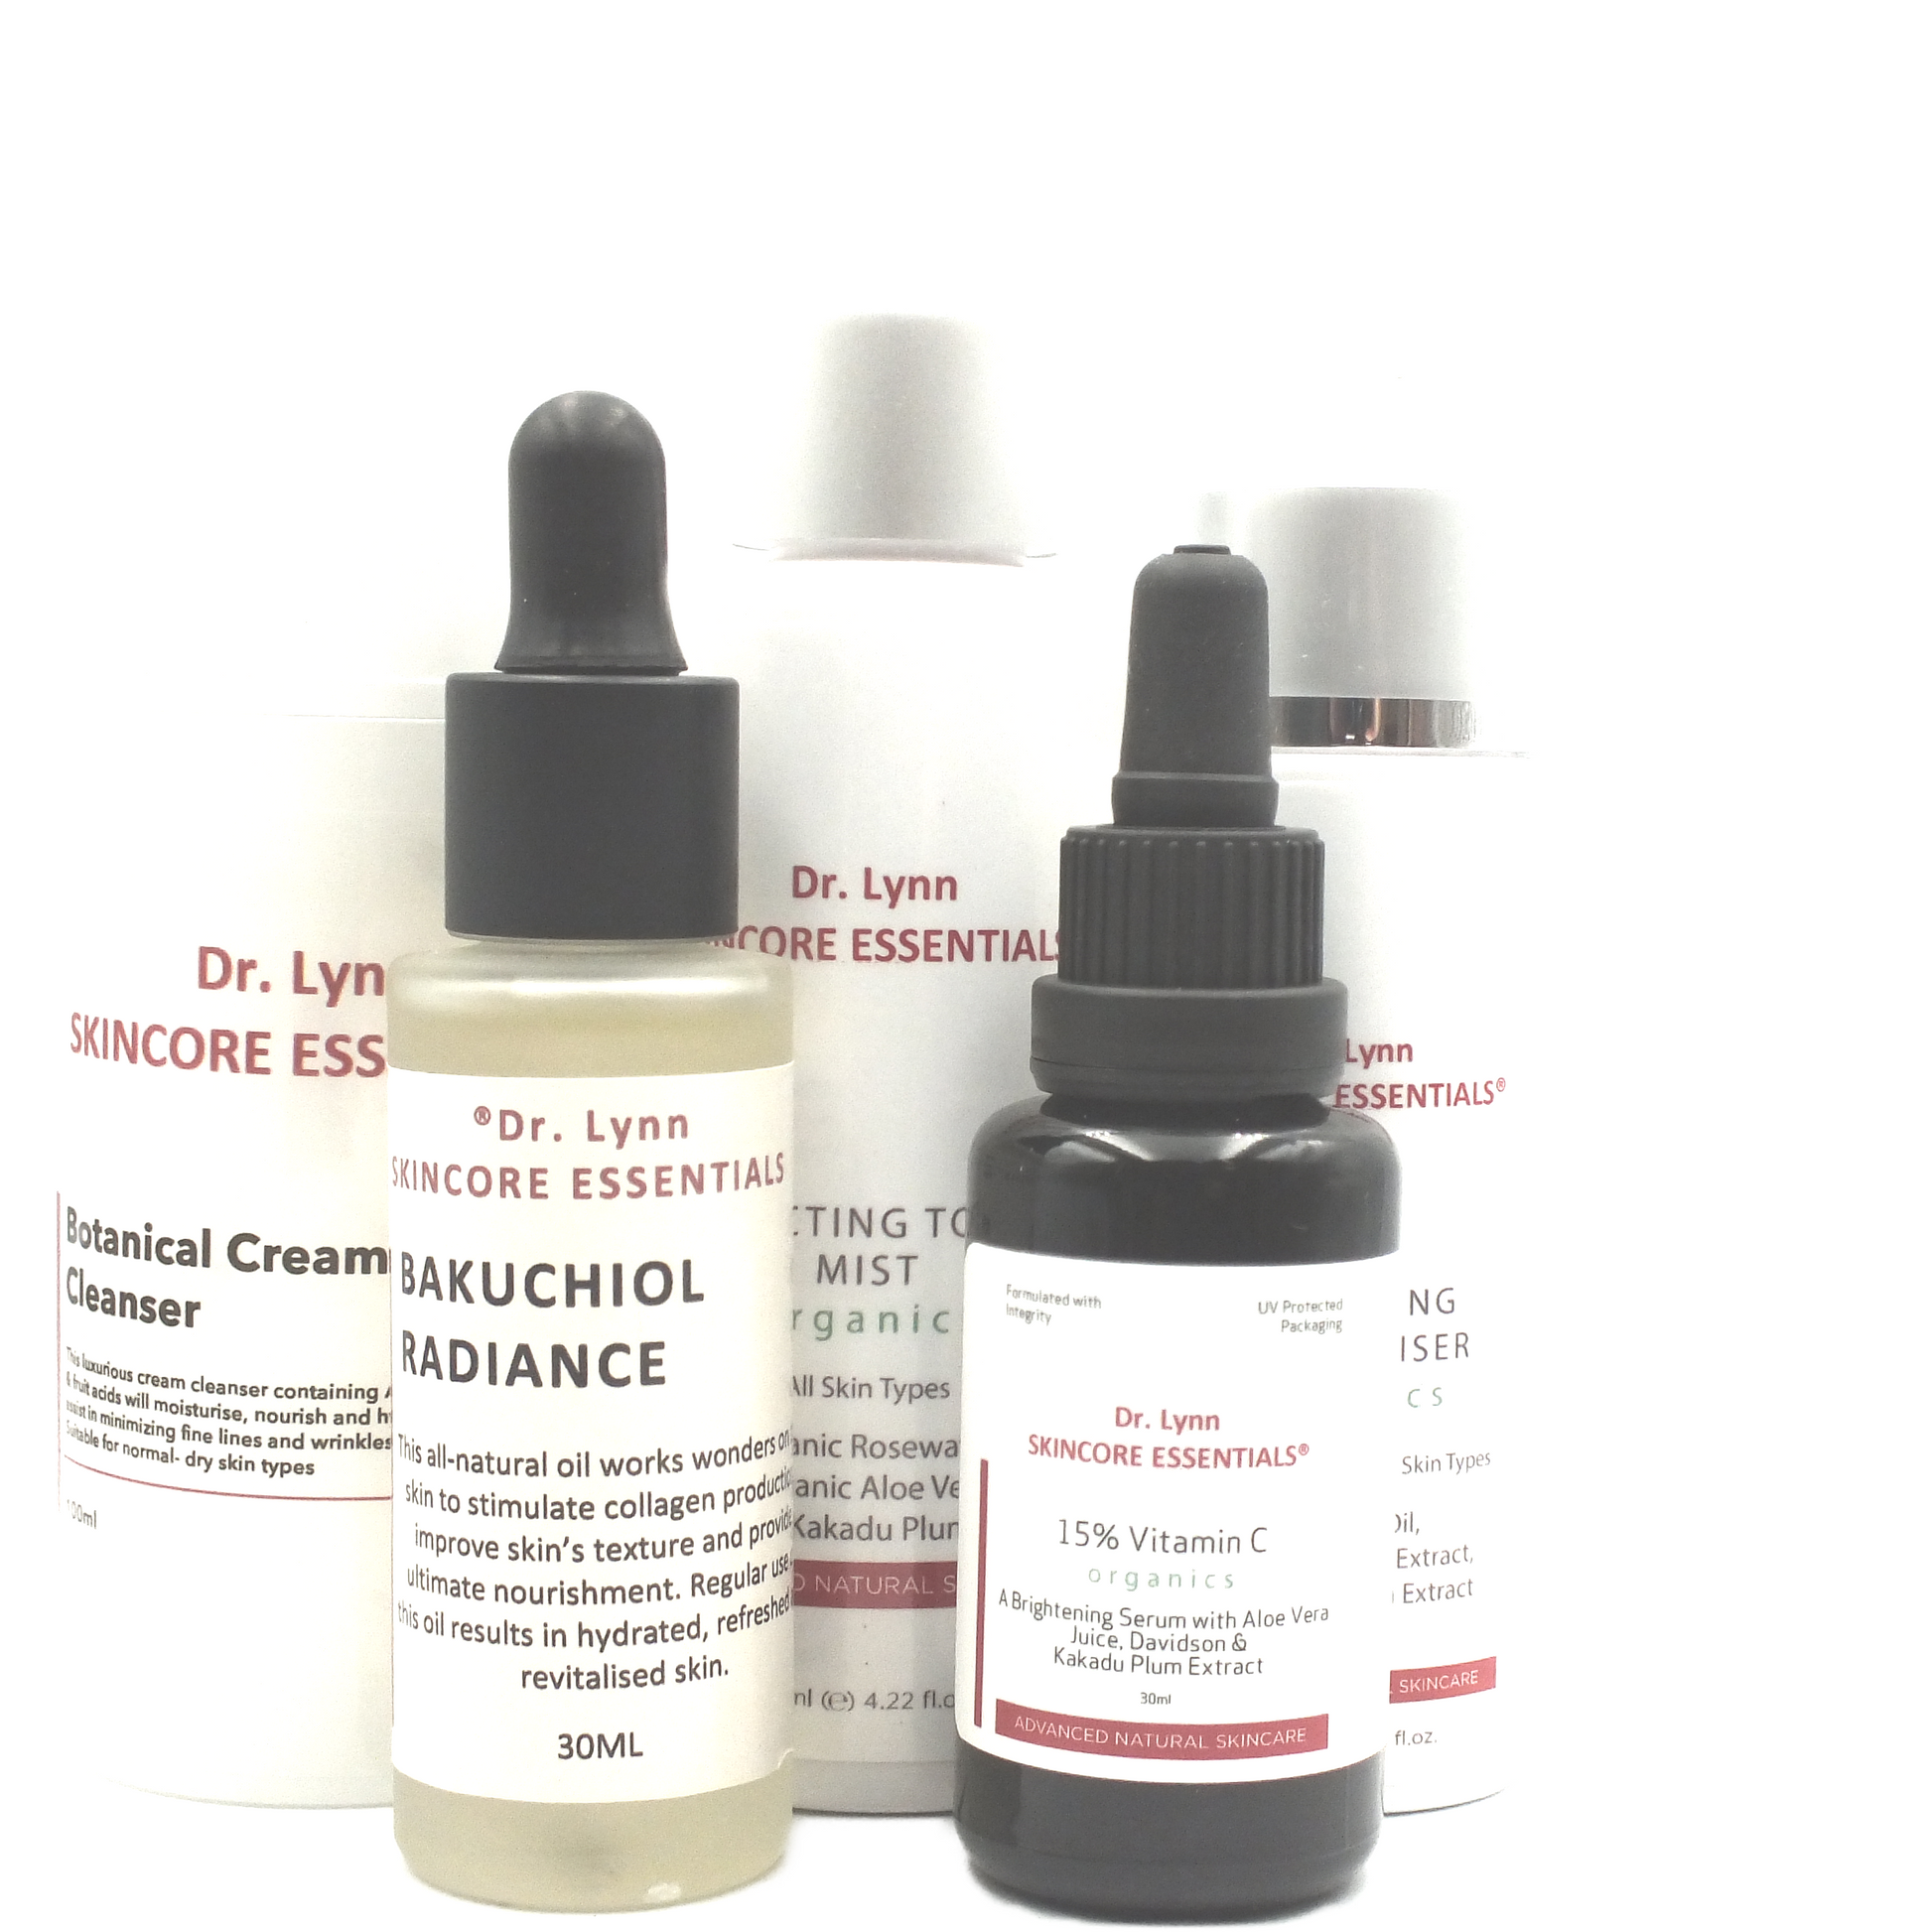 Dr Lynn Skincore Essentials moisturisers, serums, scrubs